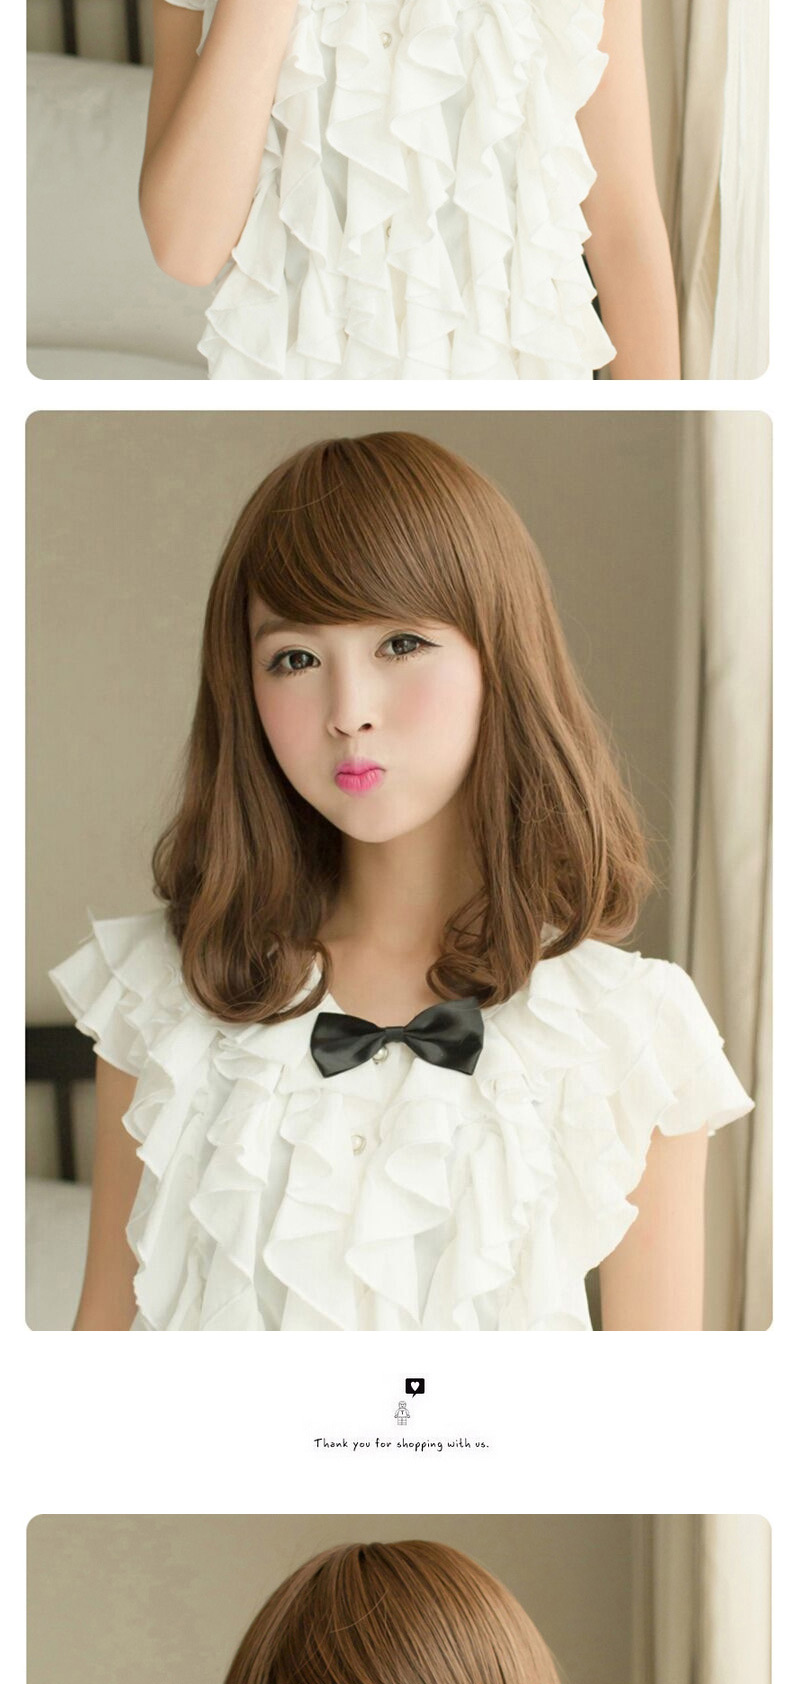 Fashion Linen Yellow Tilted Bang Rinka Haircut Curly Design High%2dtemp Fiber Wigs,Wigs